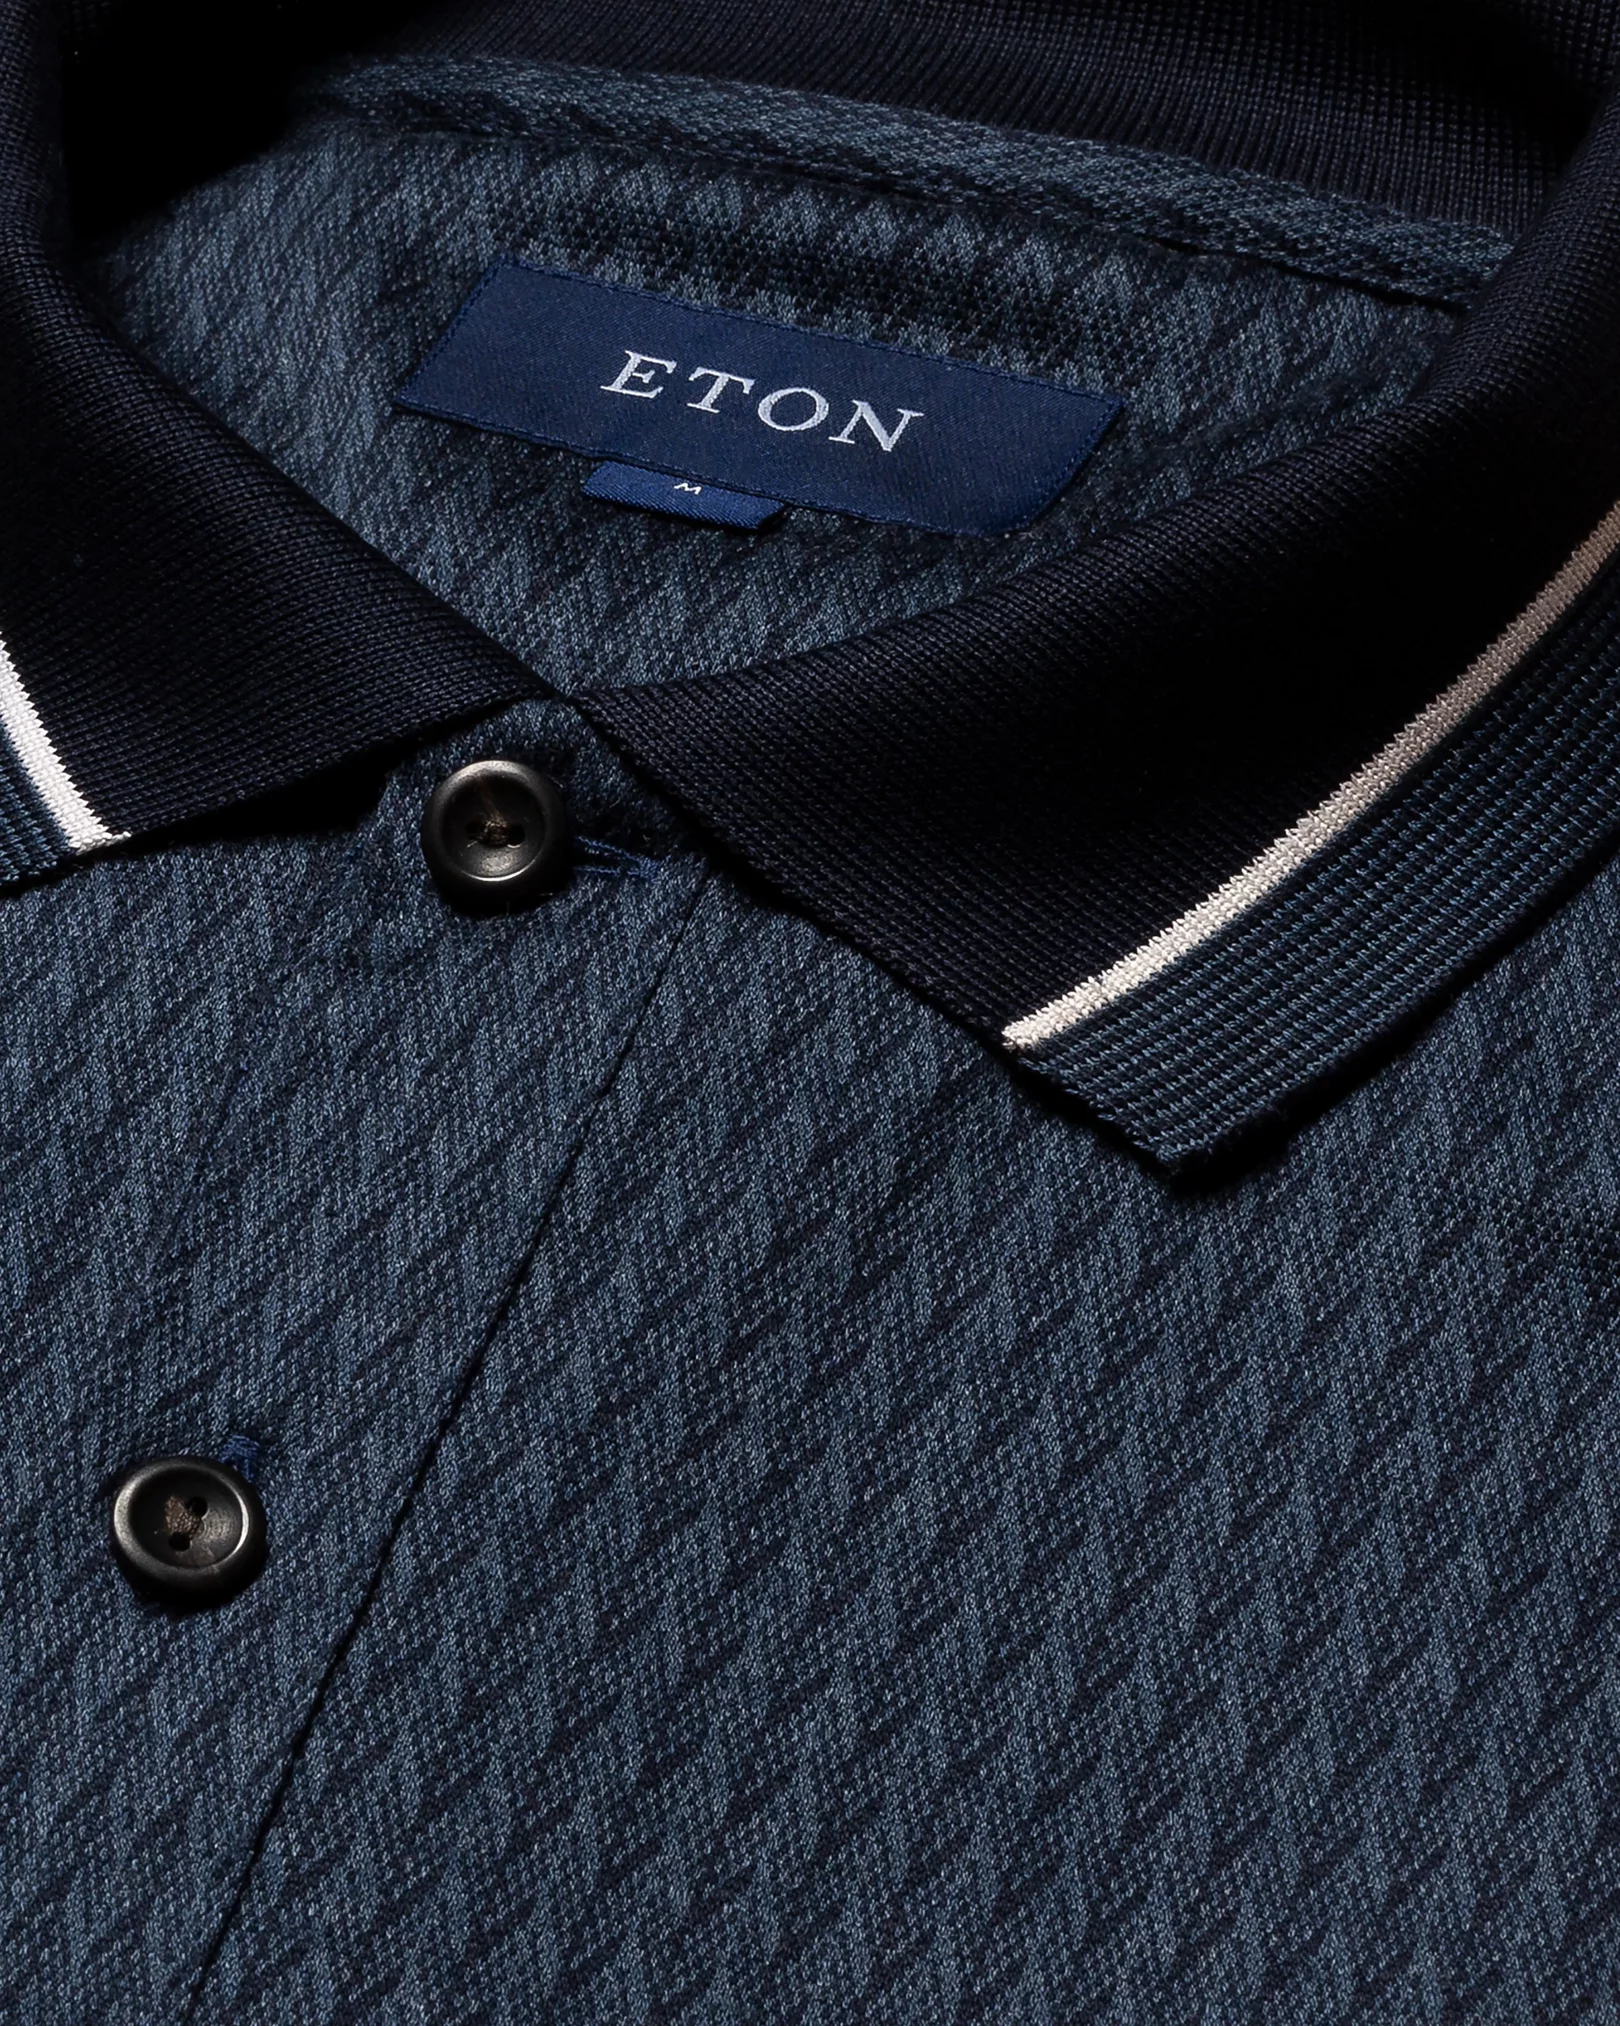 Eton - navy blue jacquard knit